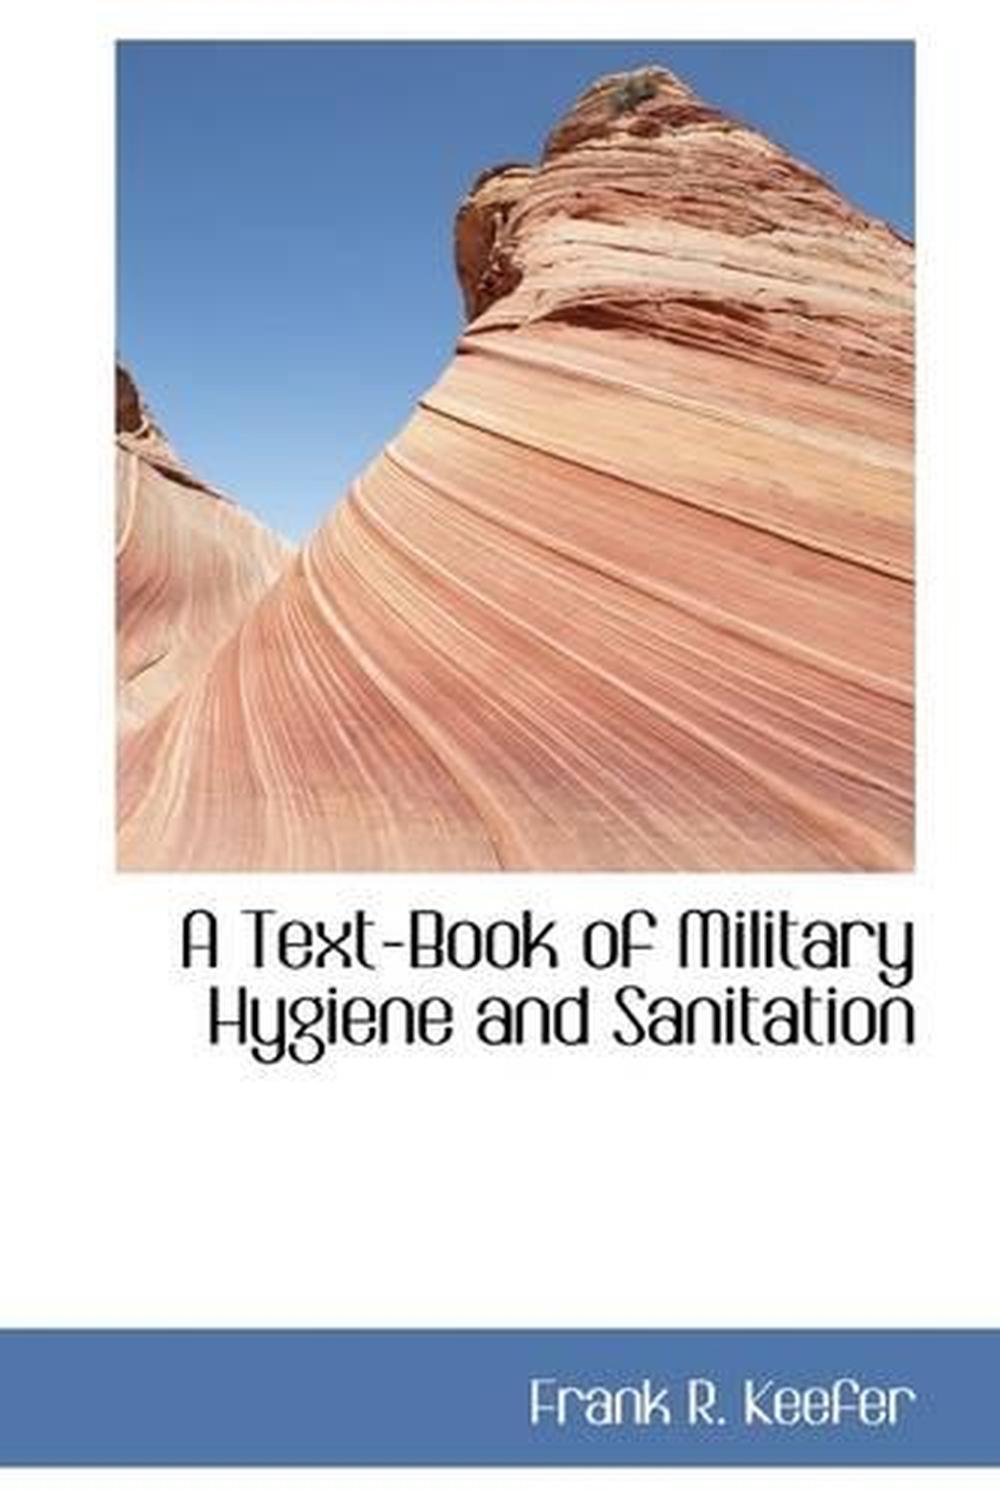 military hygiene and sanitation essay